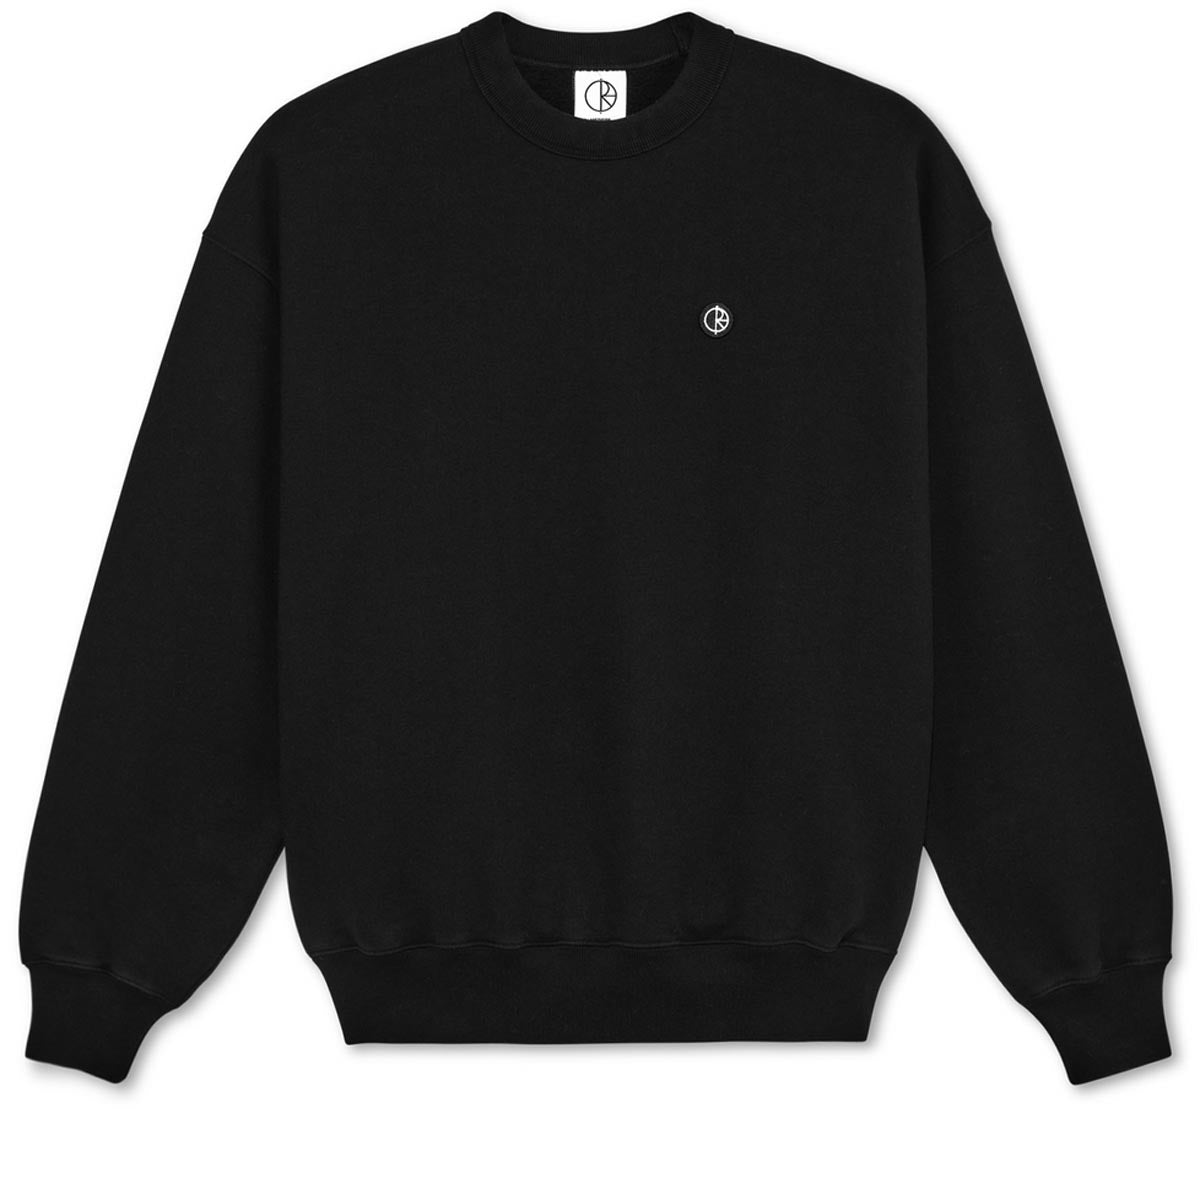 Polar Ed Crewneck Patch Sweatshirt - Black image 1